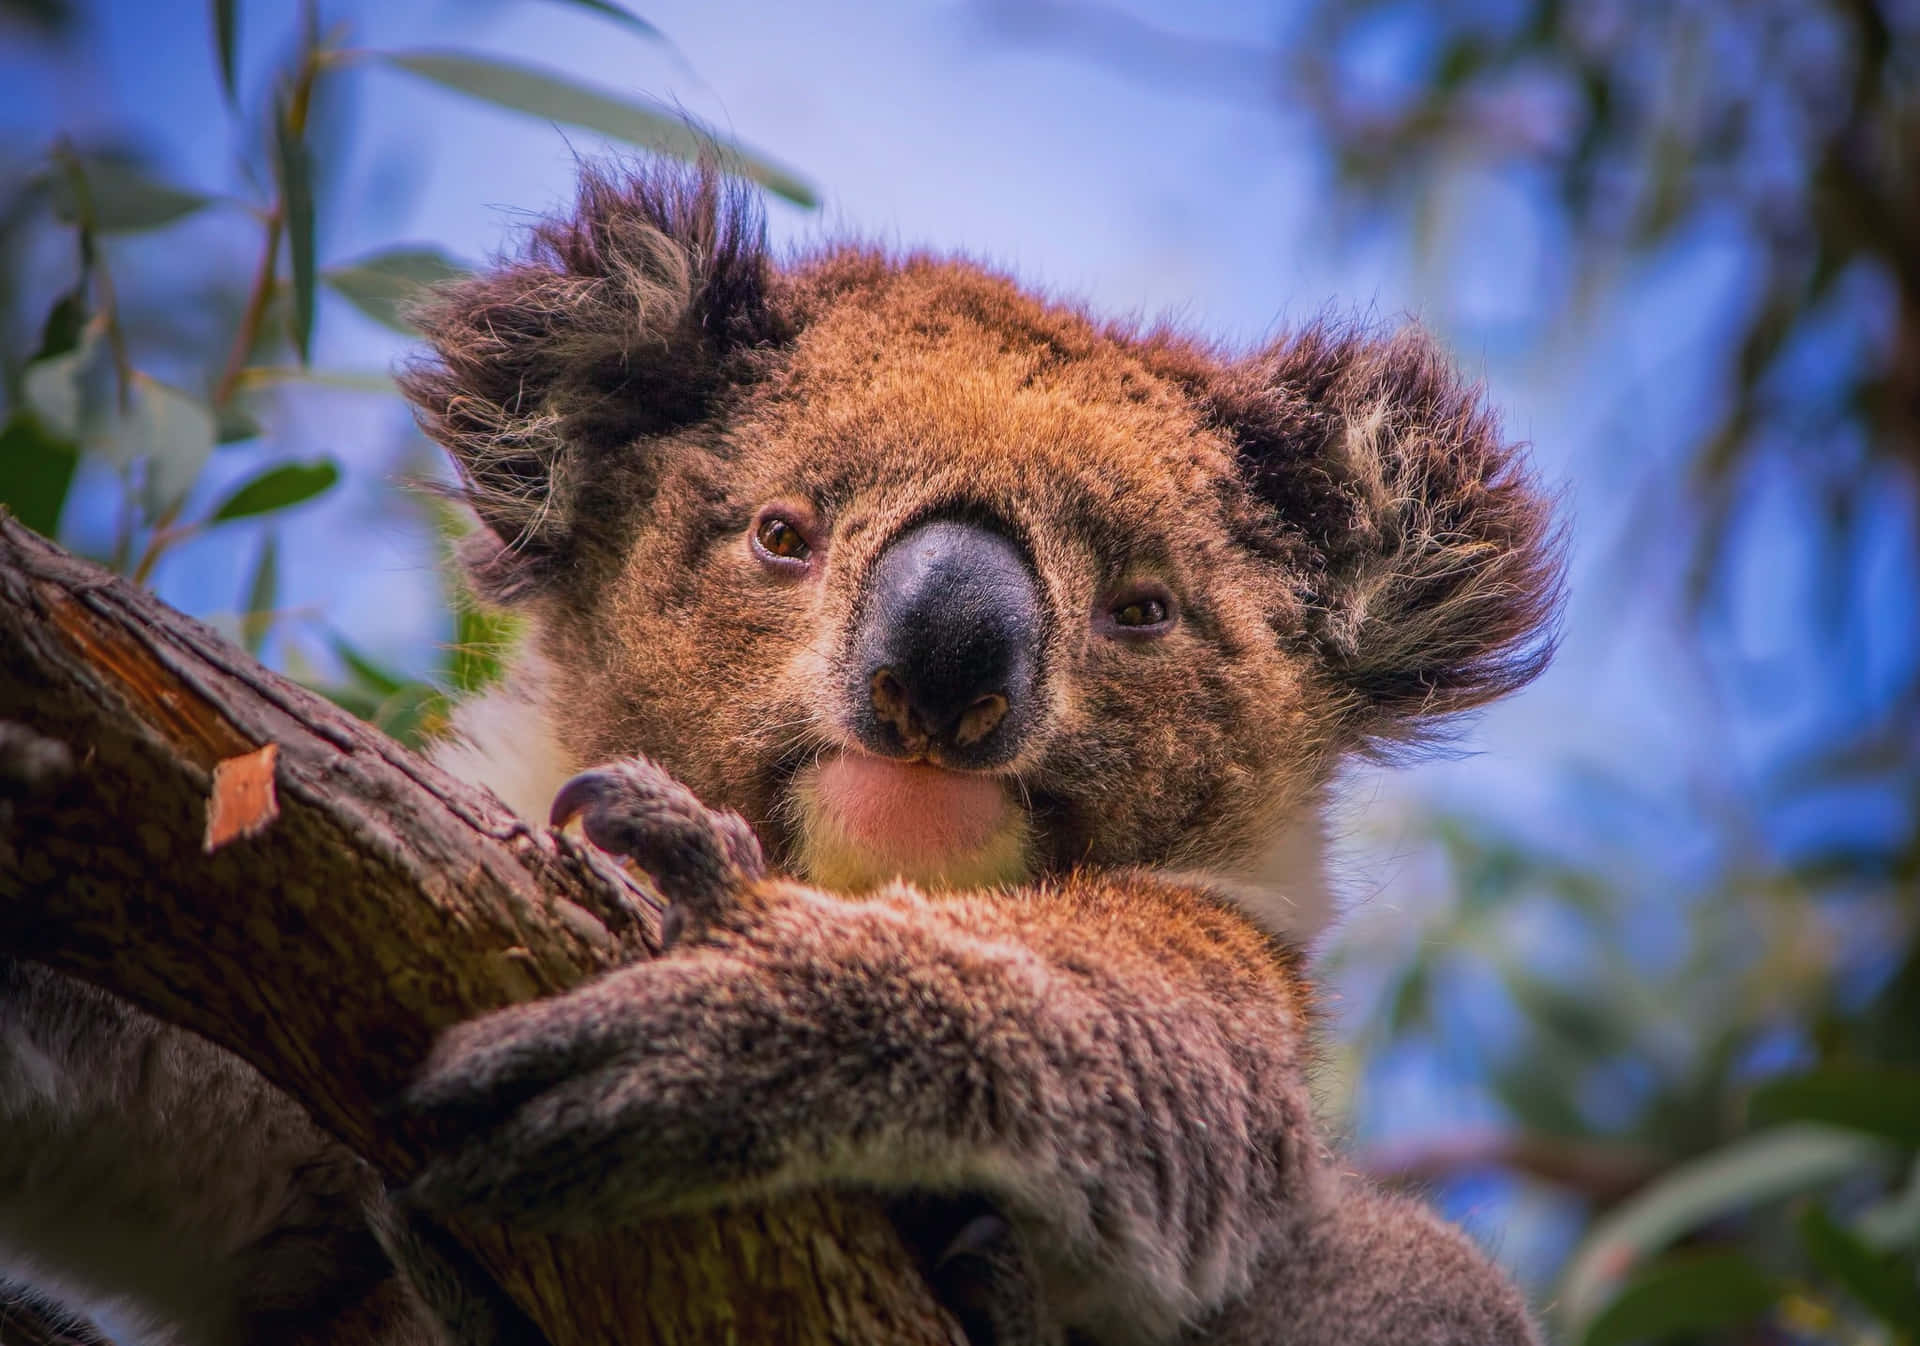 Cuddly Koala Bear Enjoying Its Refreshing Eucalyptus Meal